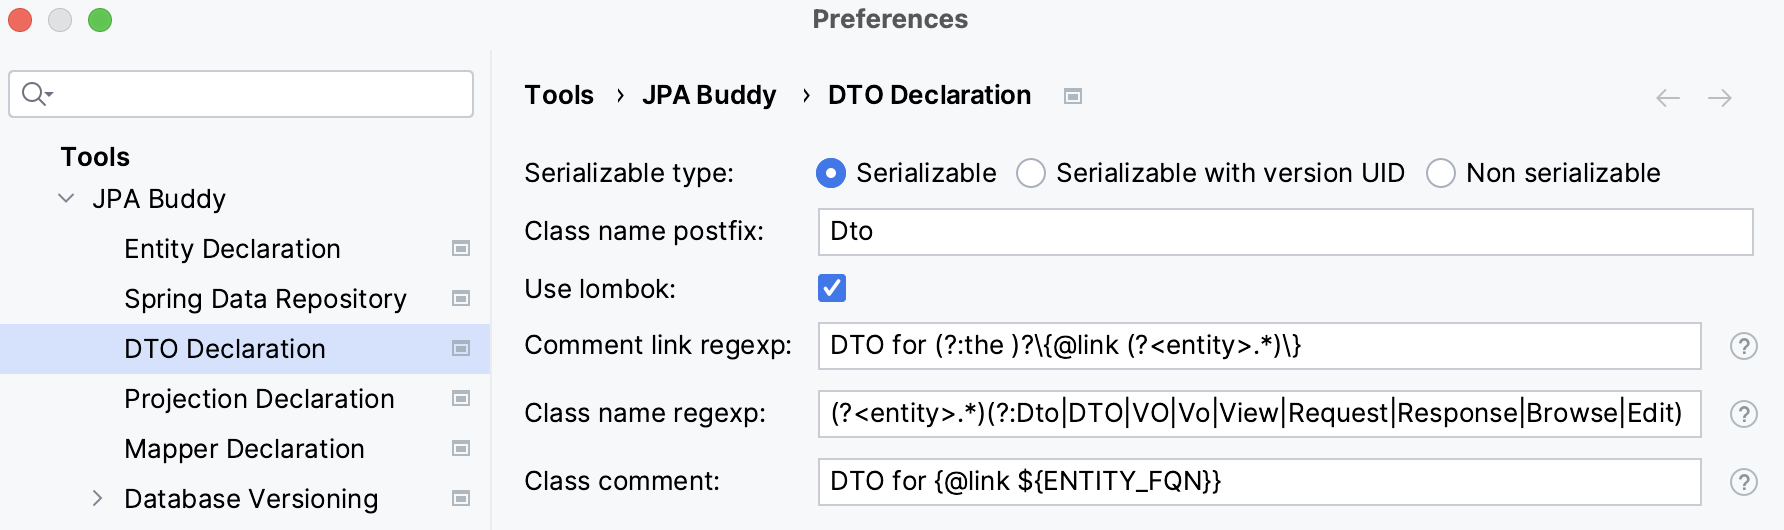 dto-declarations-preferences